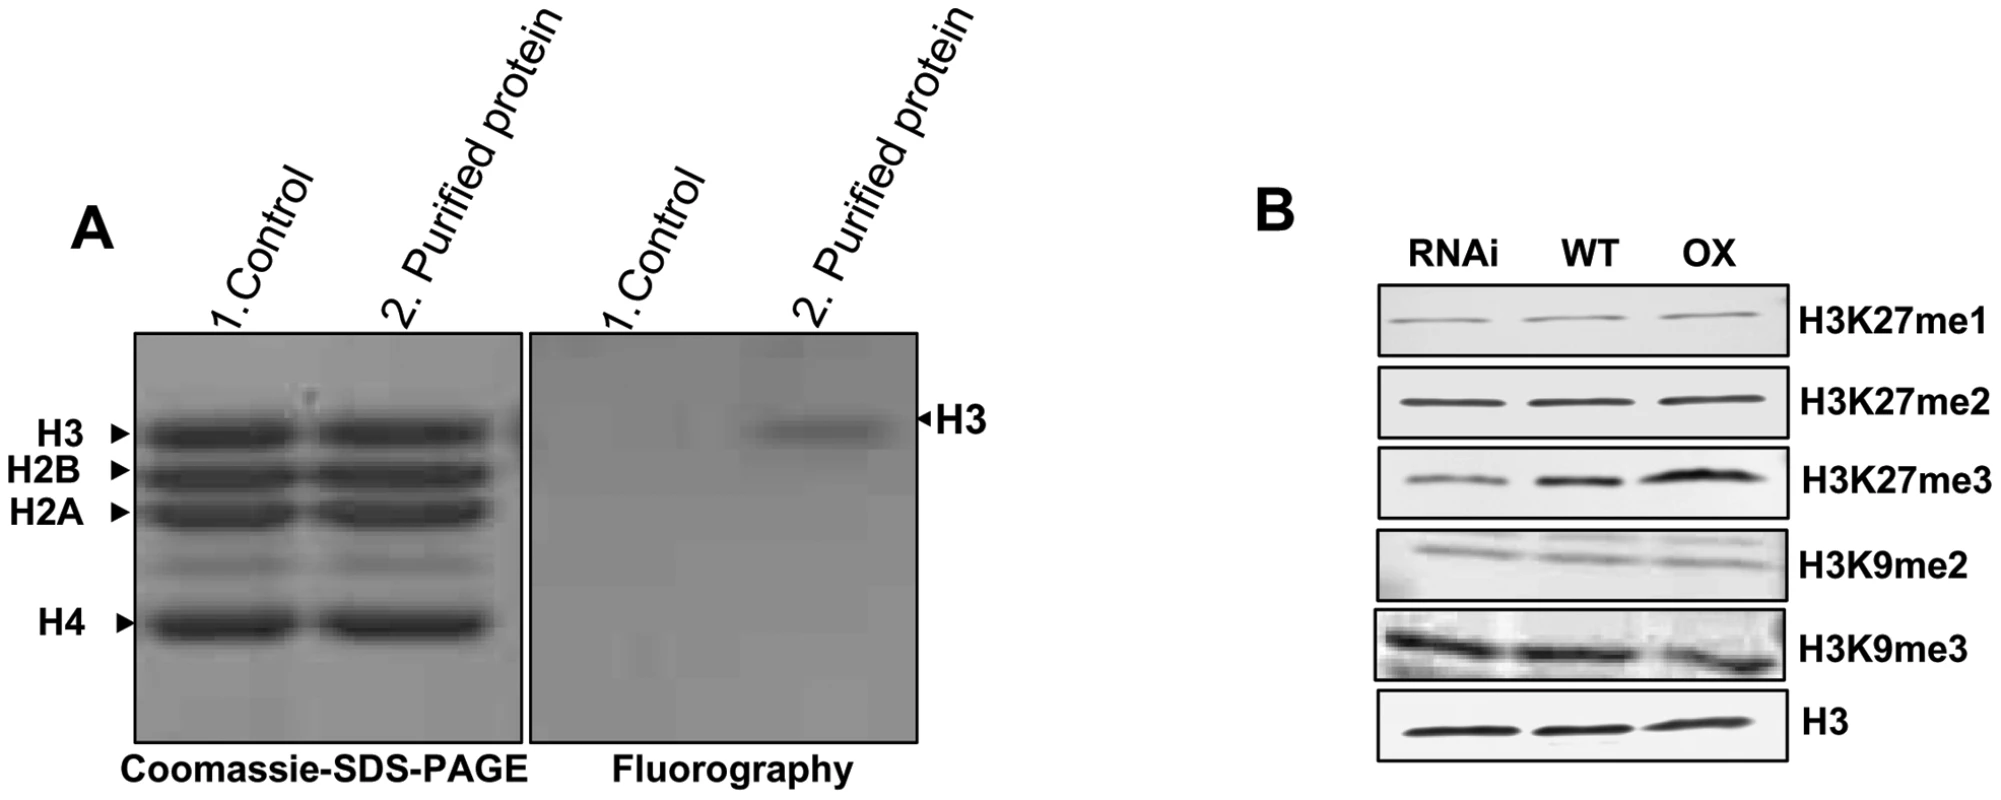 <i>In vitro</i> histone methyl transferase assay and immunoblot analyses of H3 modifications in transgenic lines.